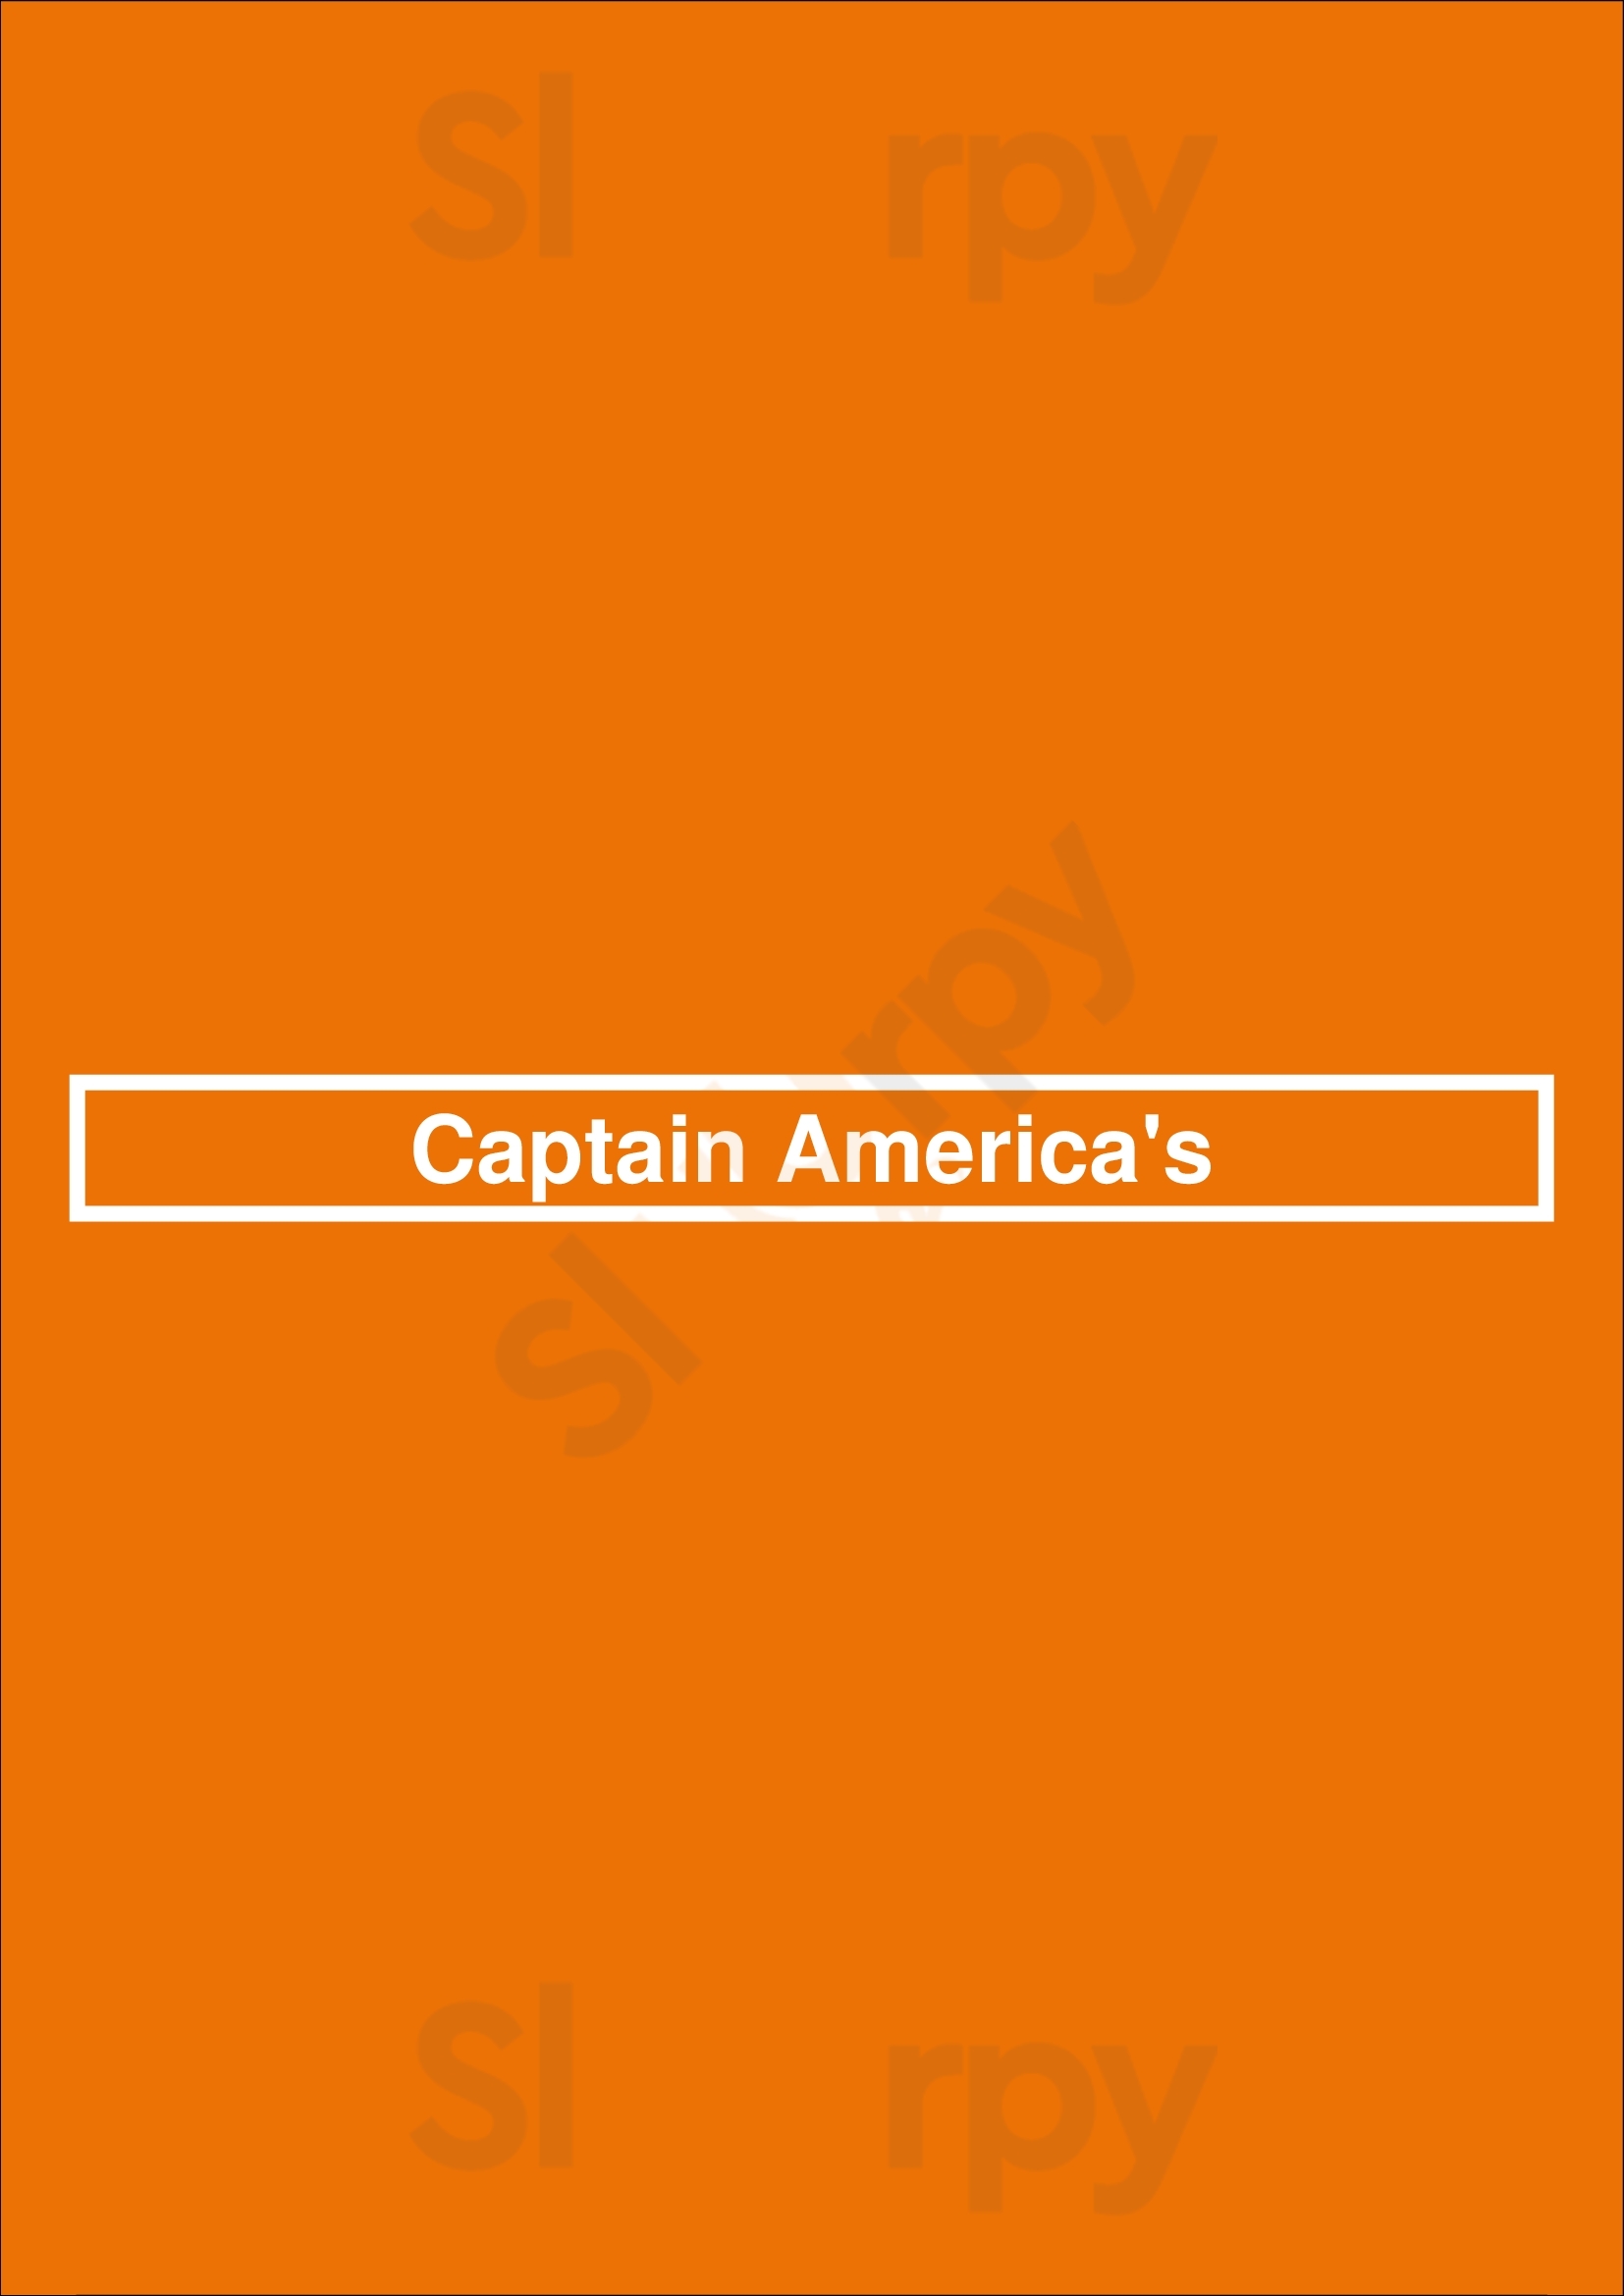 Captain America's Dublin Menu - 1